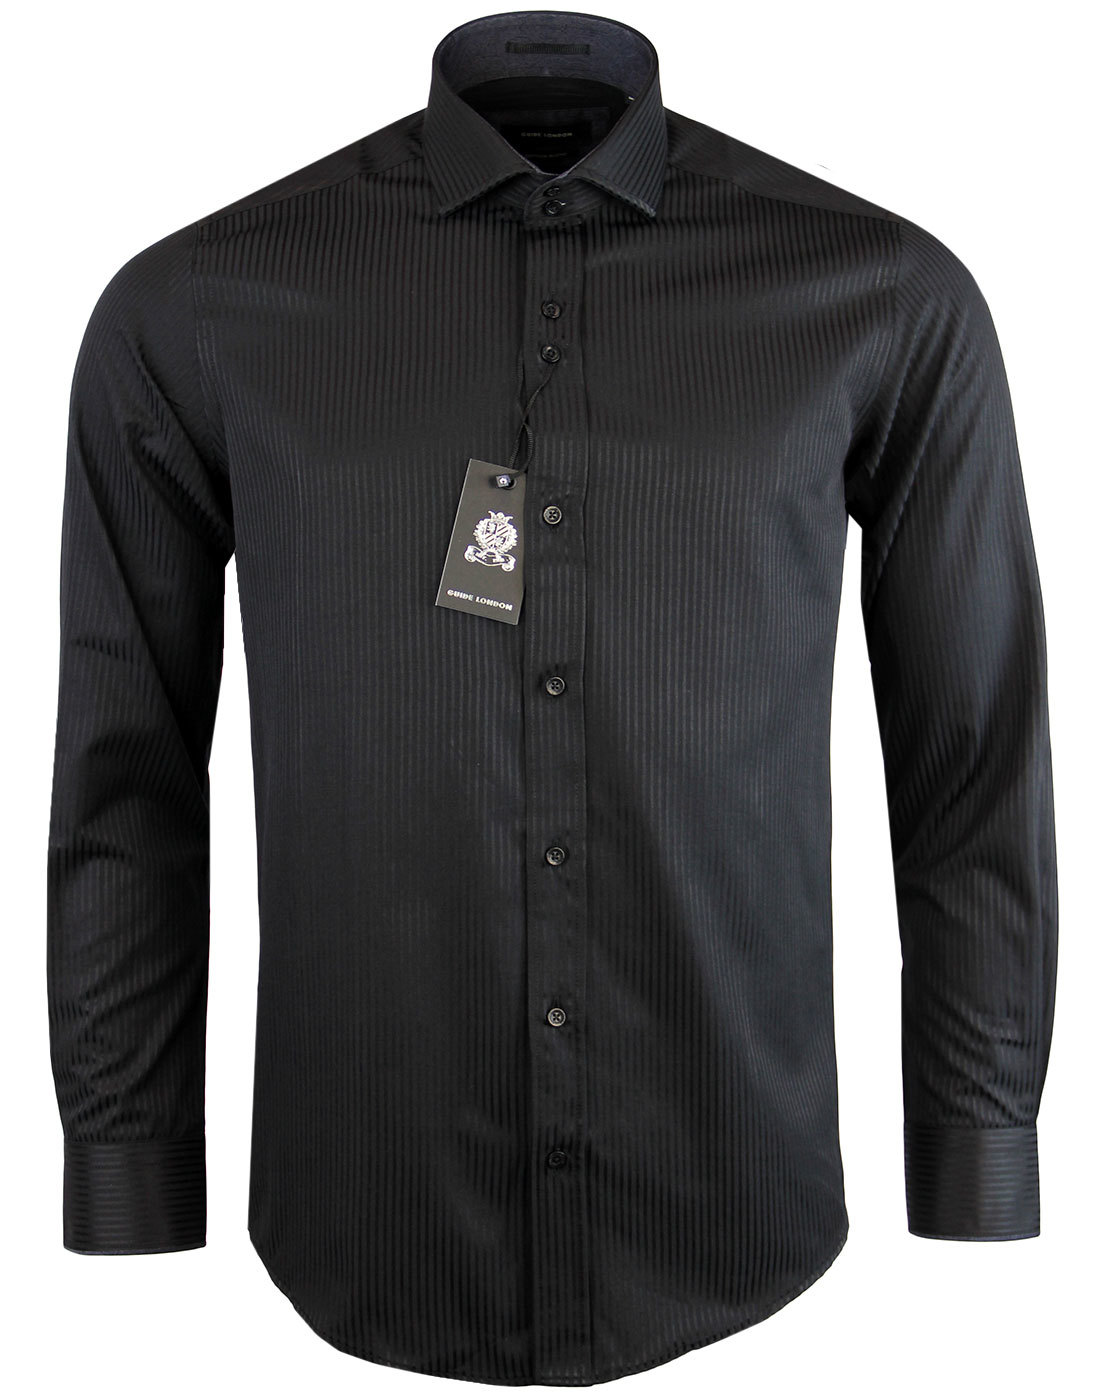 GUIDE LONDON Retro Mod Tonal Stripe Shirt BLACK